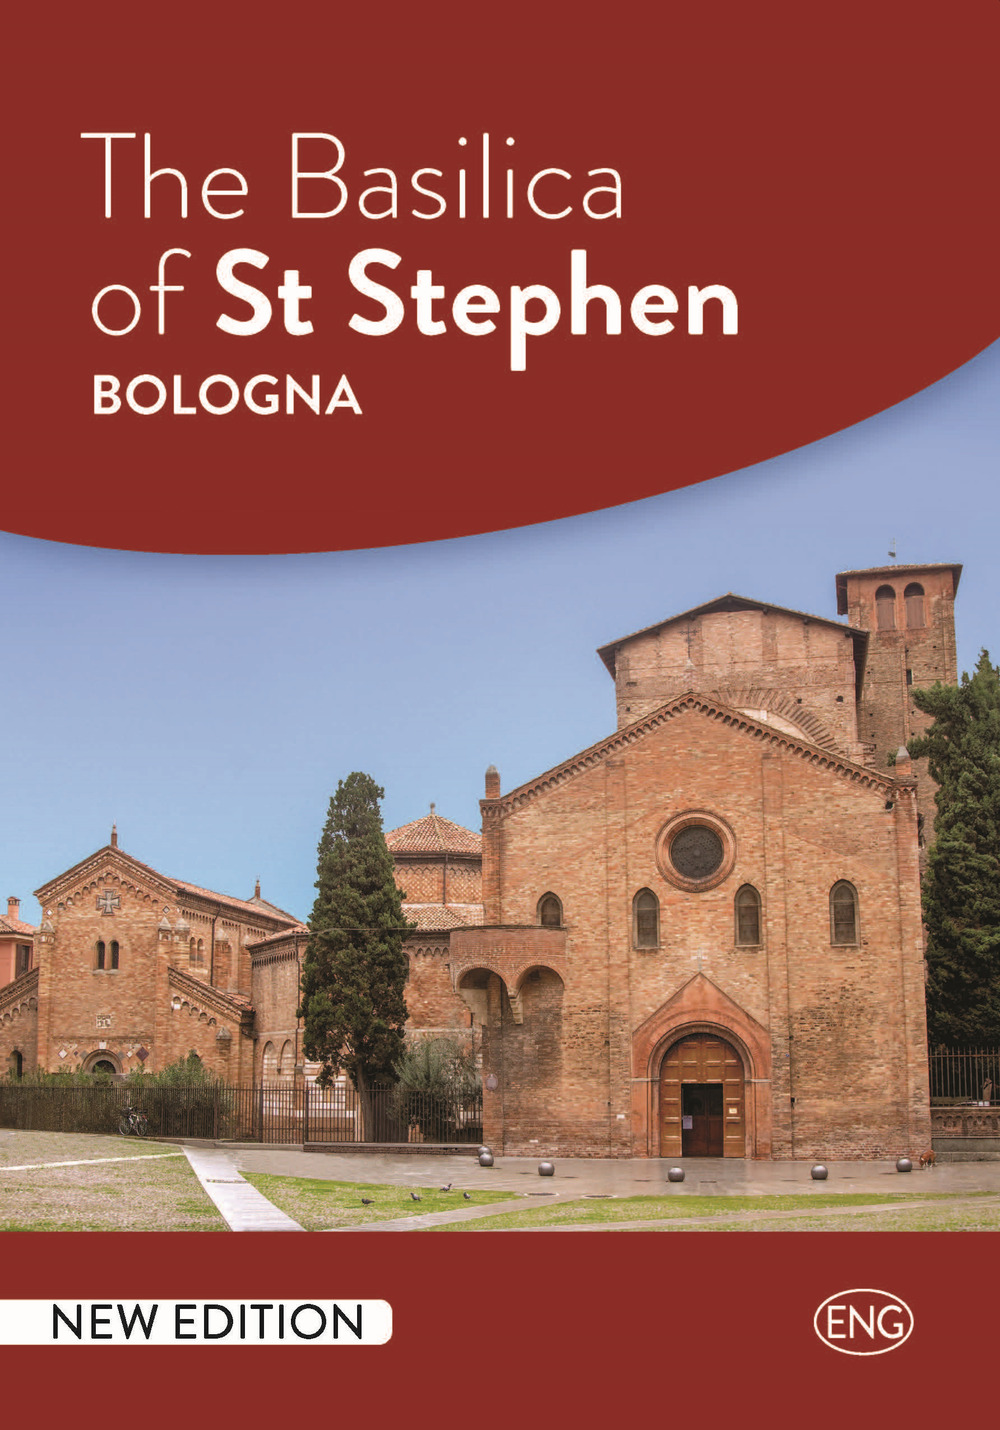 The Basilica of St Stephen Bologna